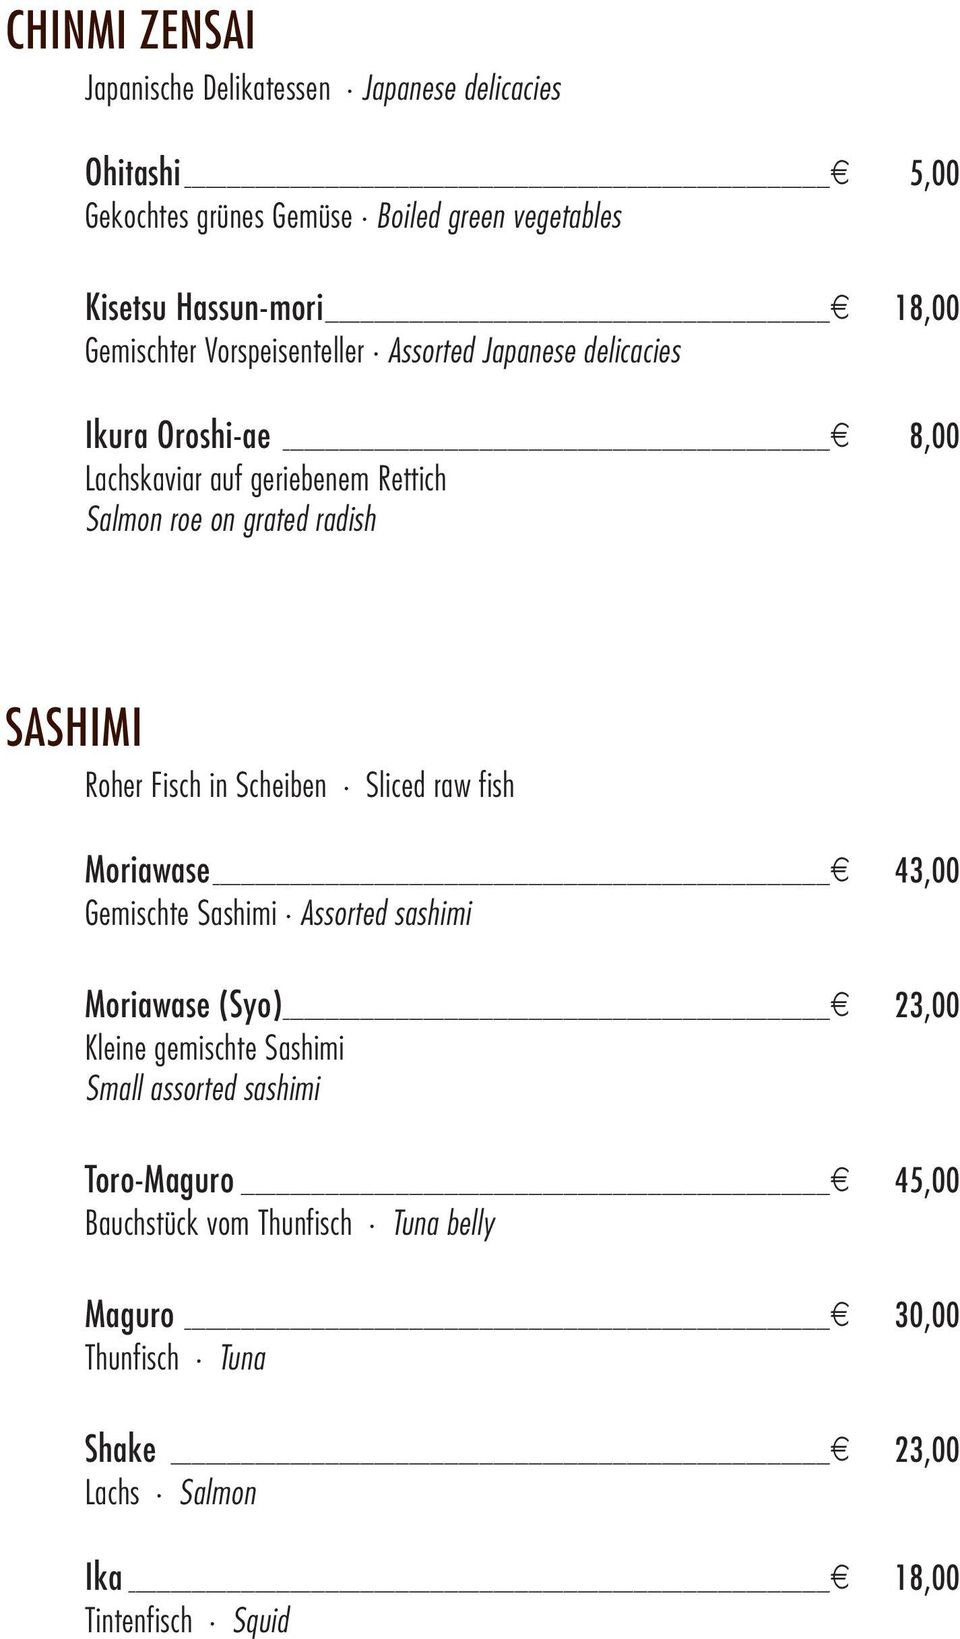 Roher Fisch in Scheiben Sliced raw fish Moriawase e 43,00 Gemischte Sashimi Assorted sashimi Moriawase (Syo) e 23,00 Kleine gemischte Sashimi Small